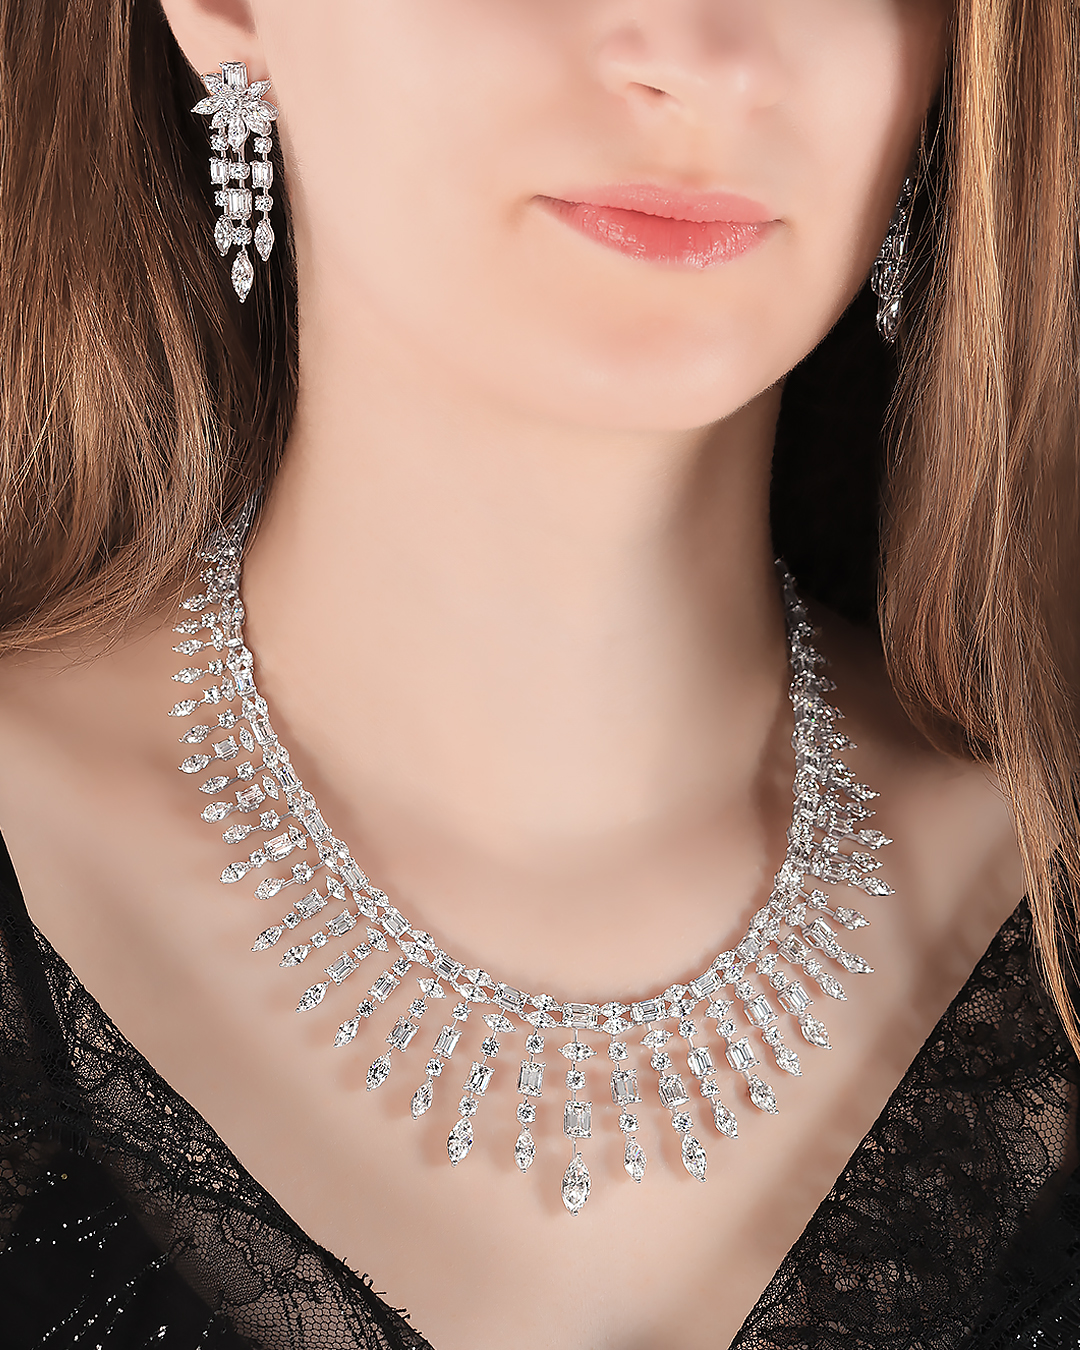 celia fabbri photography high jewellery chatila jewels amazing diamonds parrure